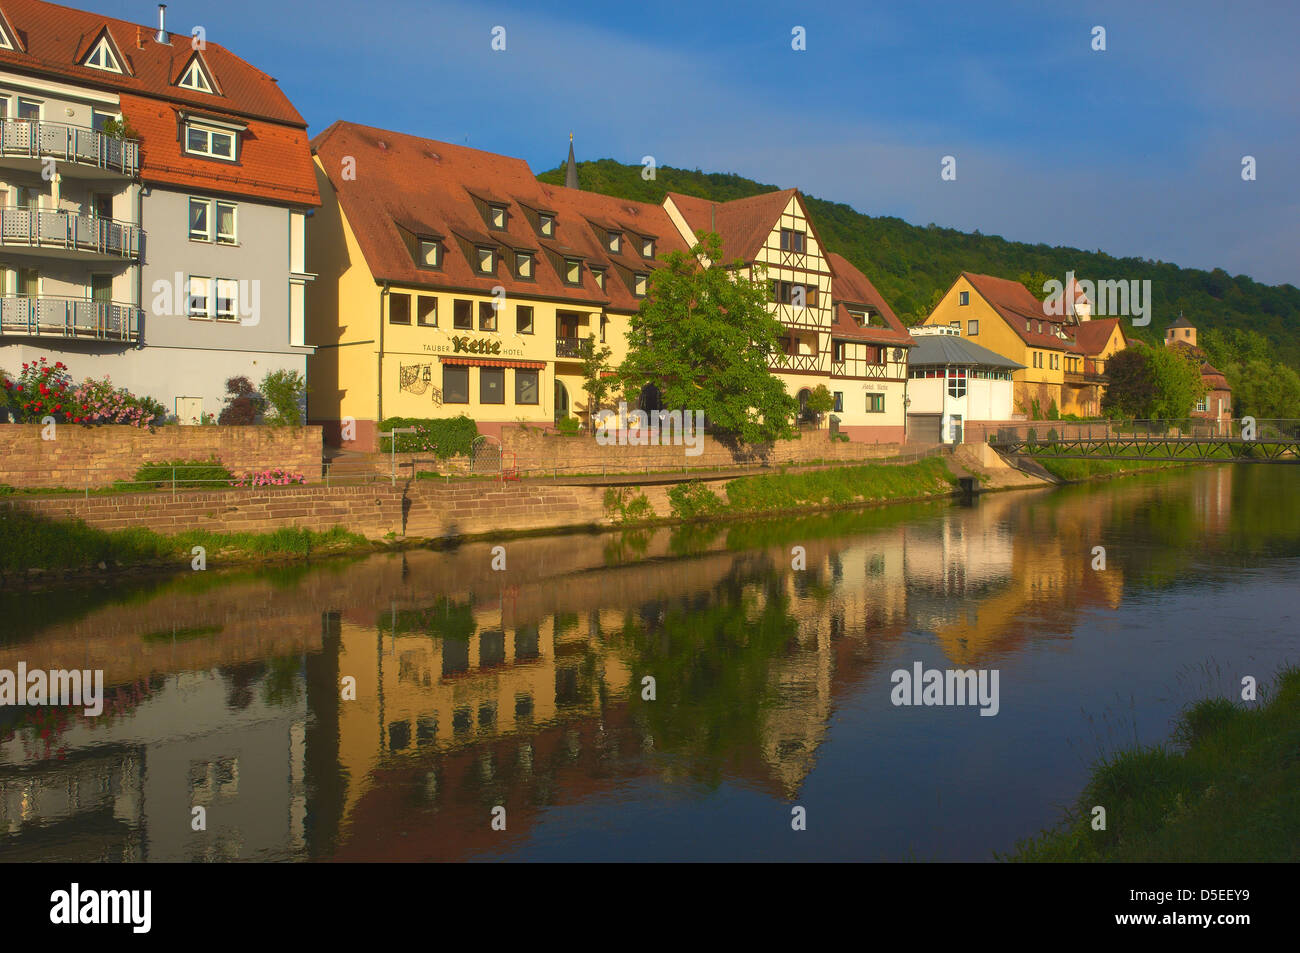 Wertheim, Tauber River, Baden-Wuerttemberg, Main-Tauber, Romantic Road, Romantische Strasse, Germany. Image Stock Photo